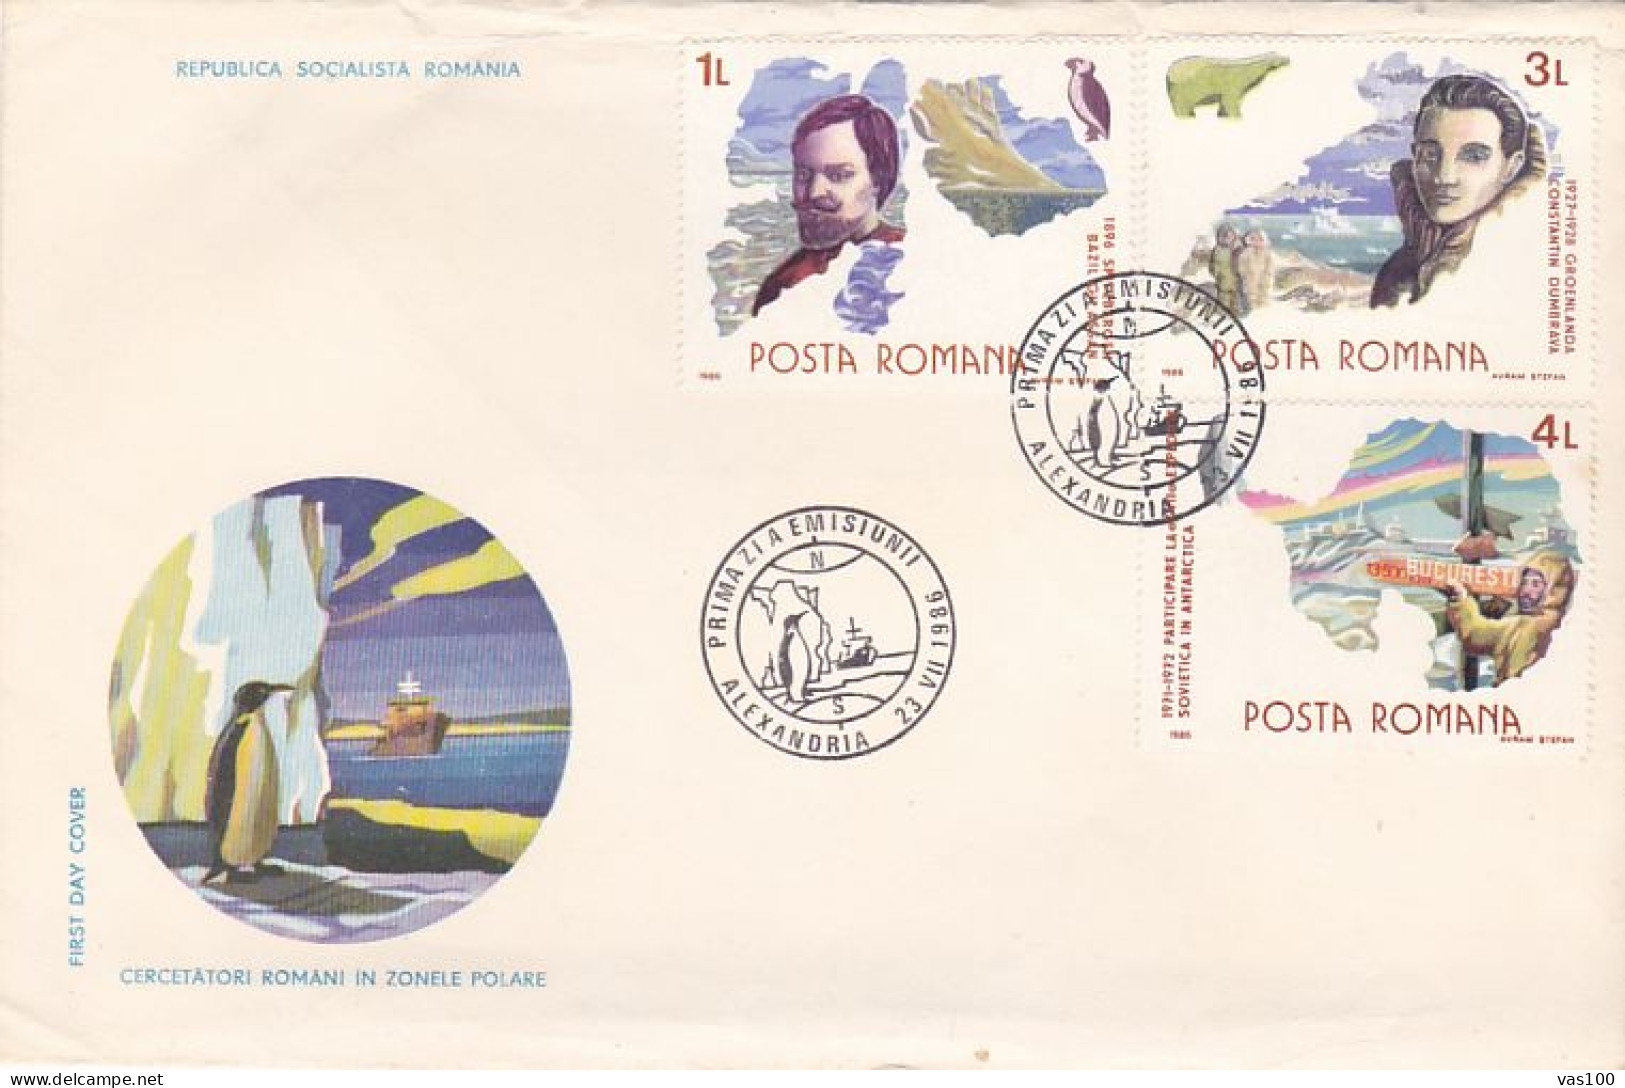 POLAR PHILATELY, ROMANIAN POLAR EXPLORERS, SHIP, PENGUINS, COVER FDC, 1986, ROMANIA - Poolreizigers & Beroemdheden